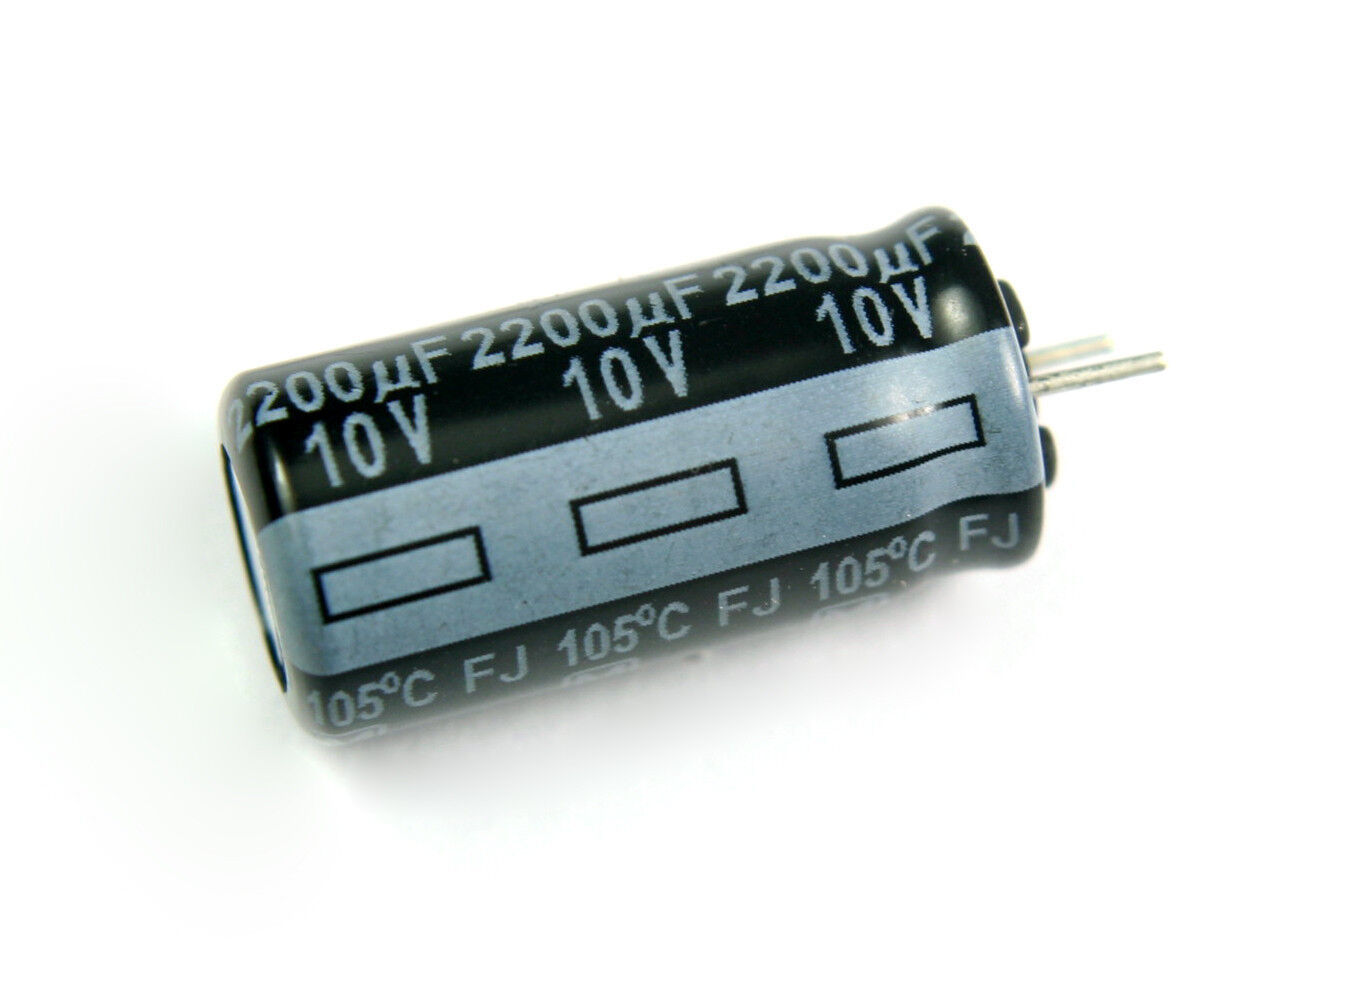 Primary image for 24pcs Panasonic FJ 2200uf 10v 105C Radial Electrolytic Capacitor Low ESR